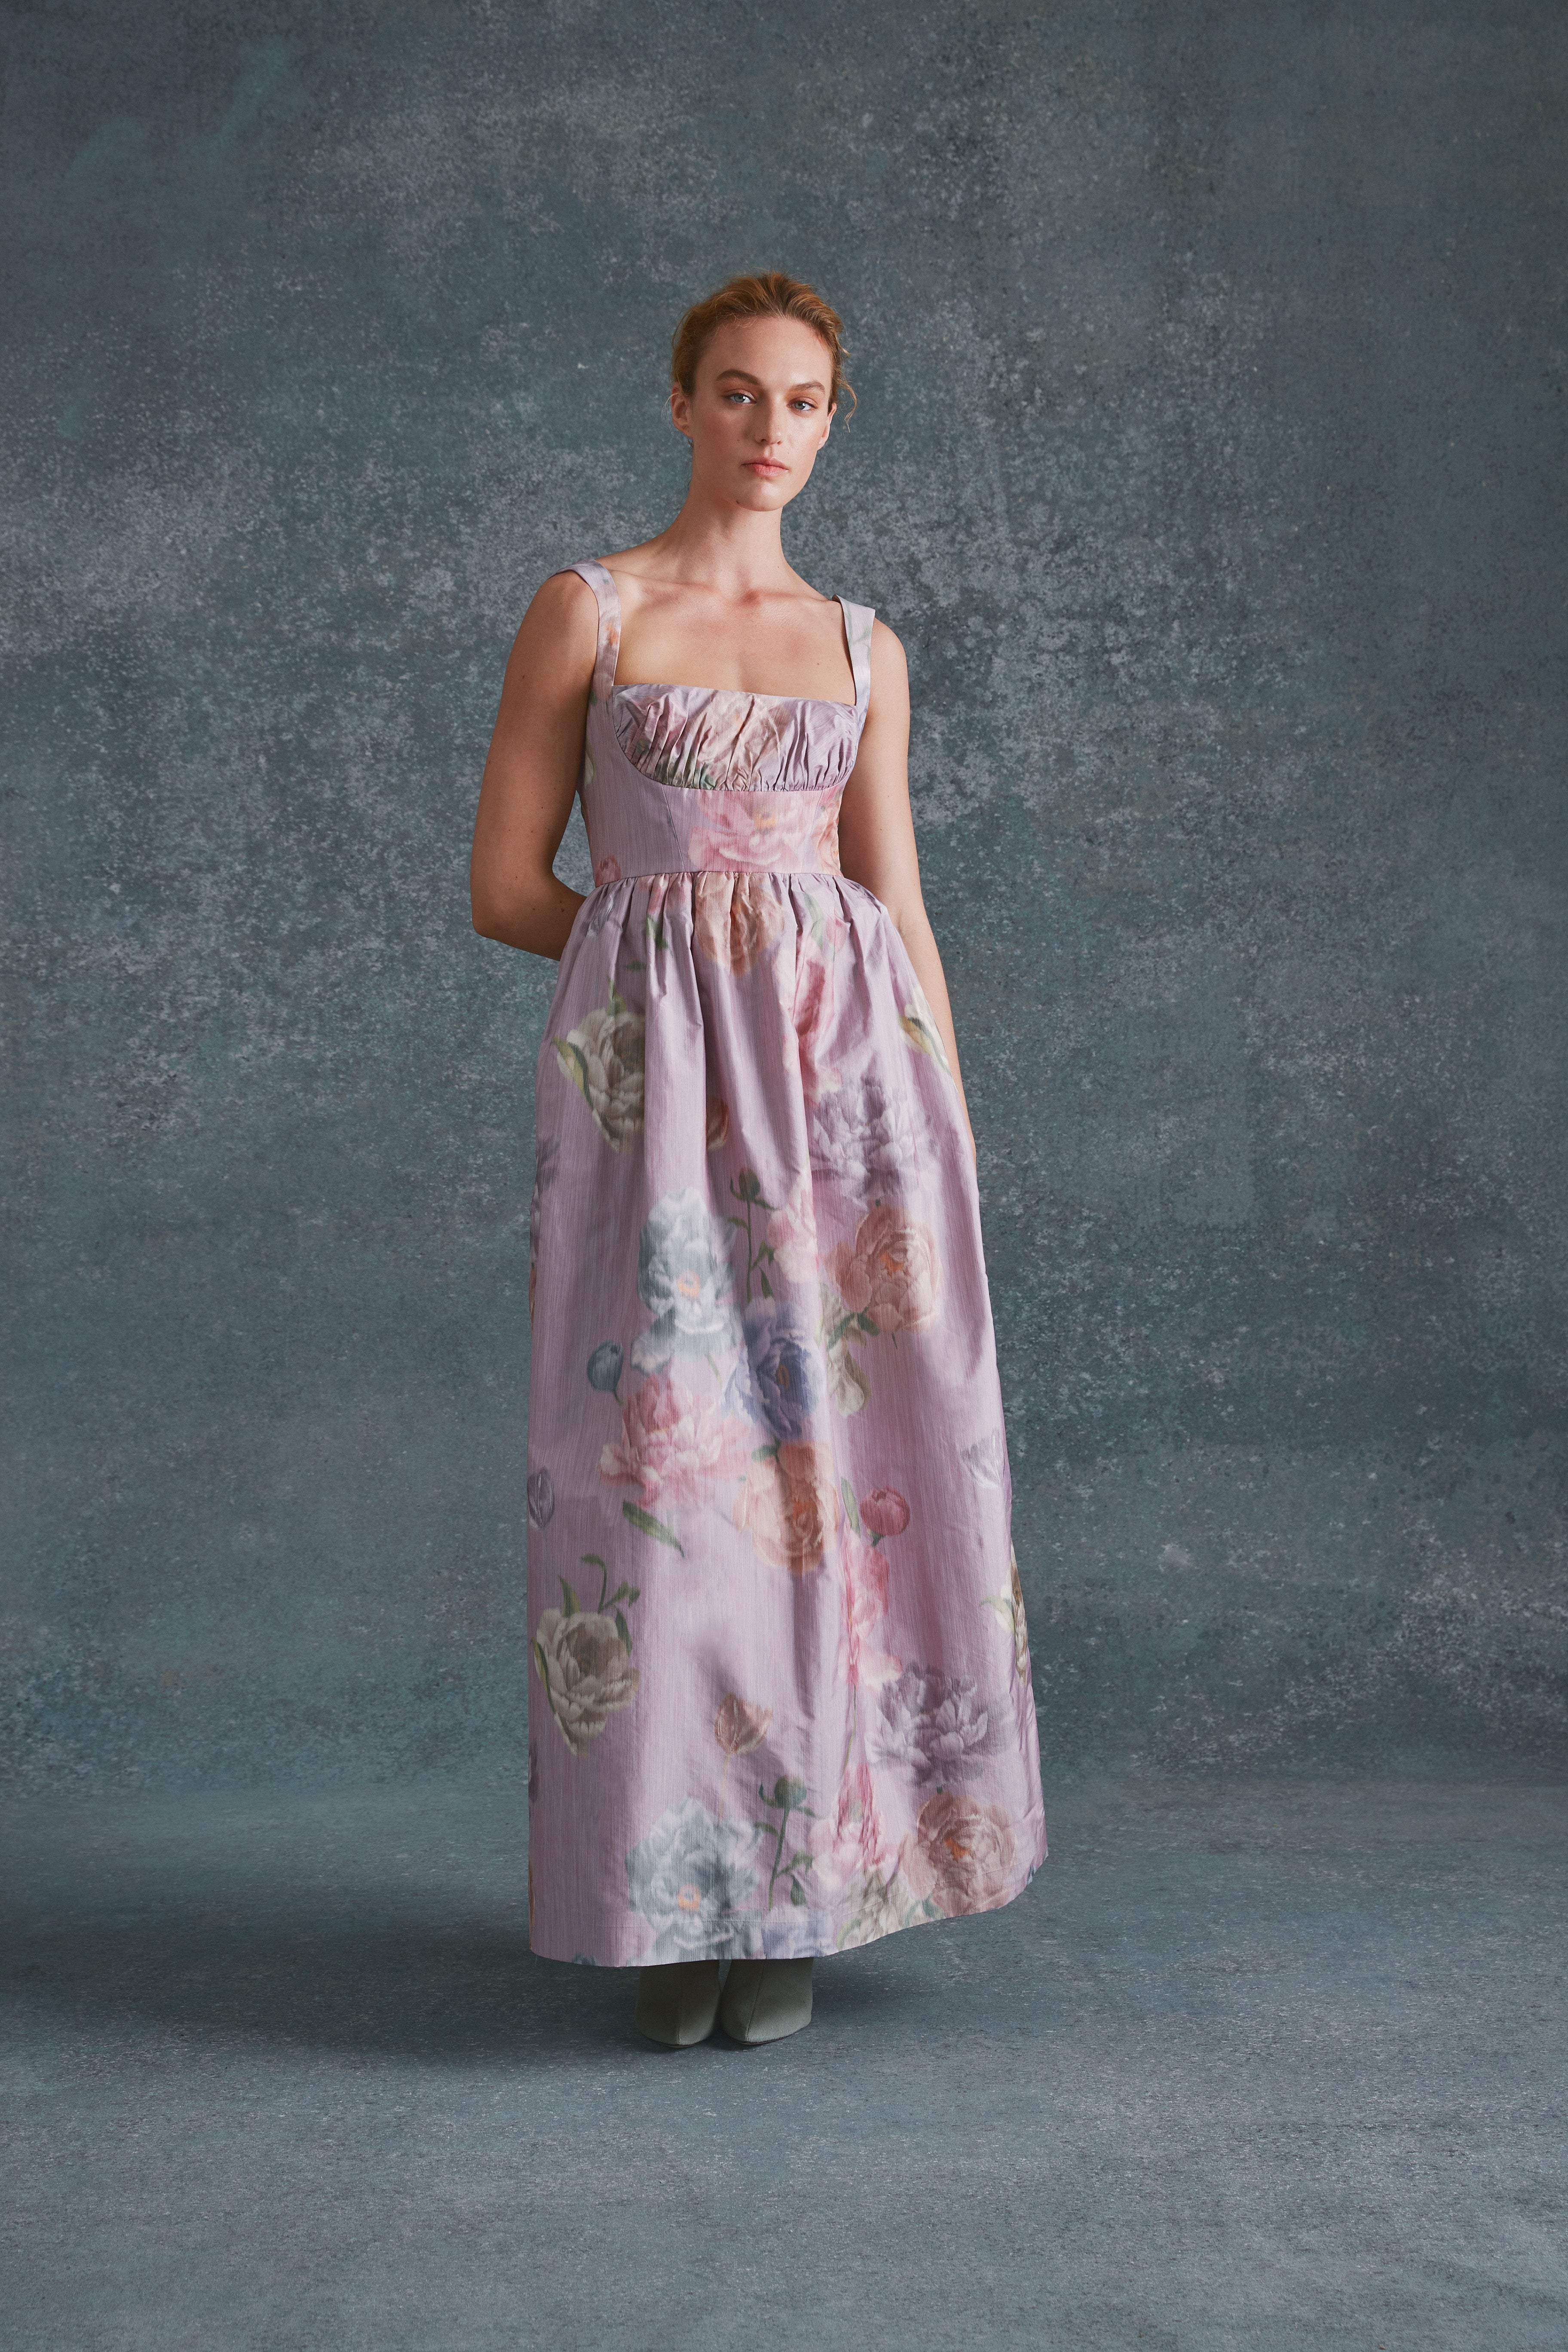 lilac floral dress